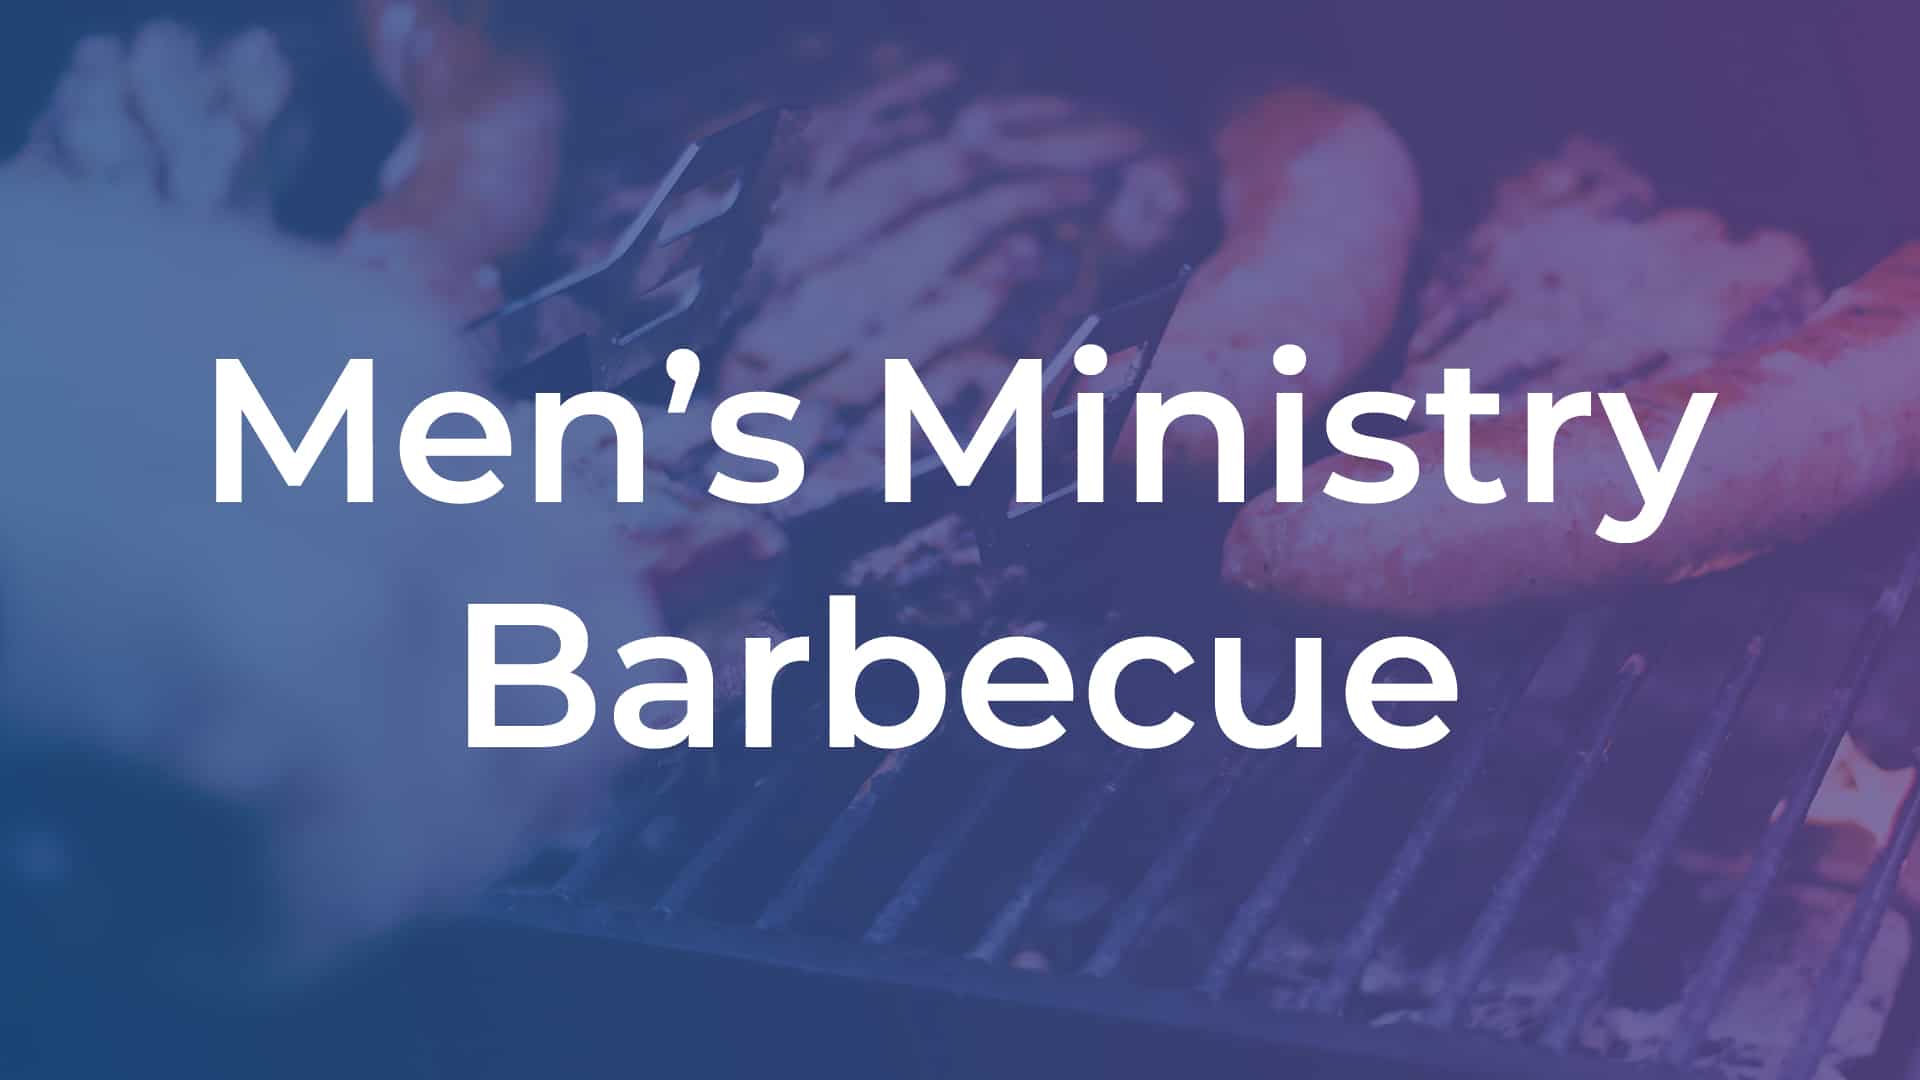 Men's Ministry BBQ